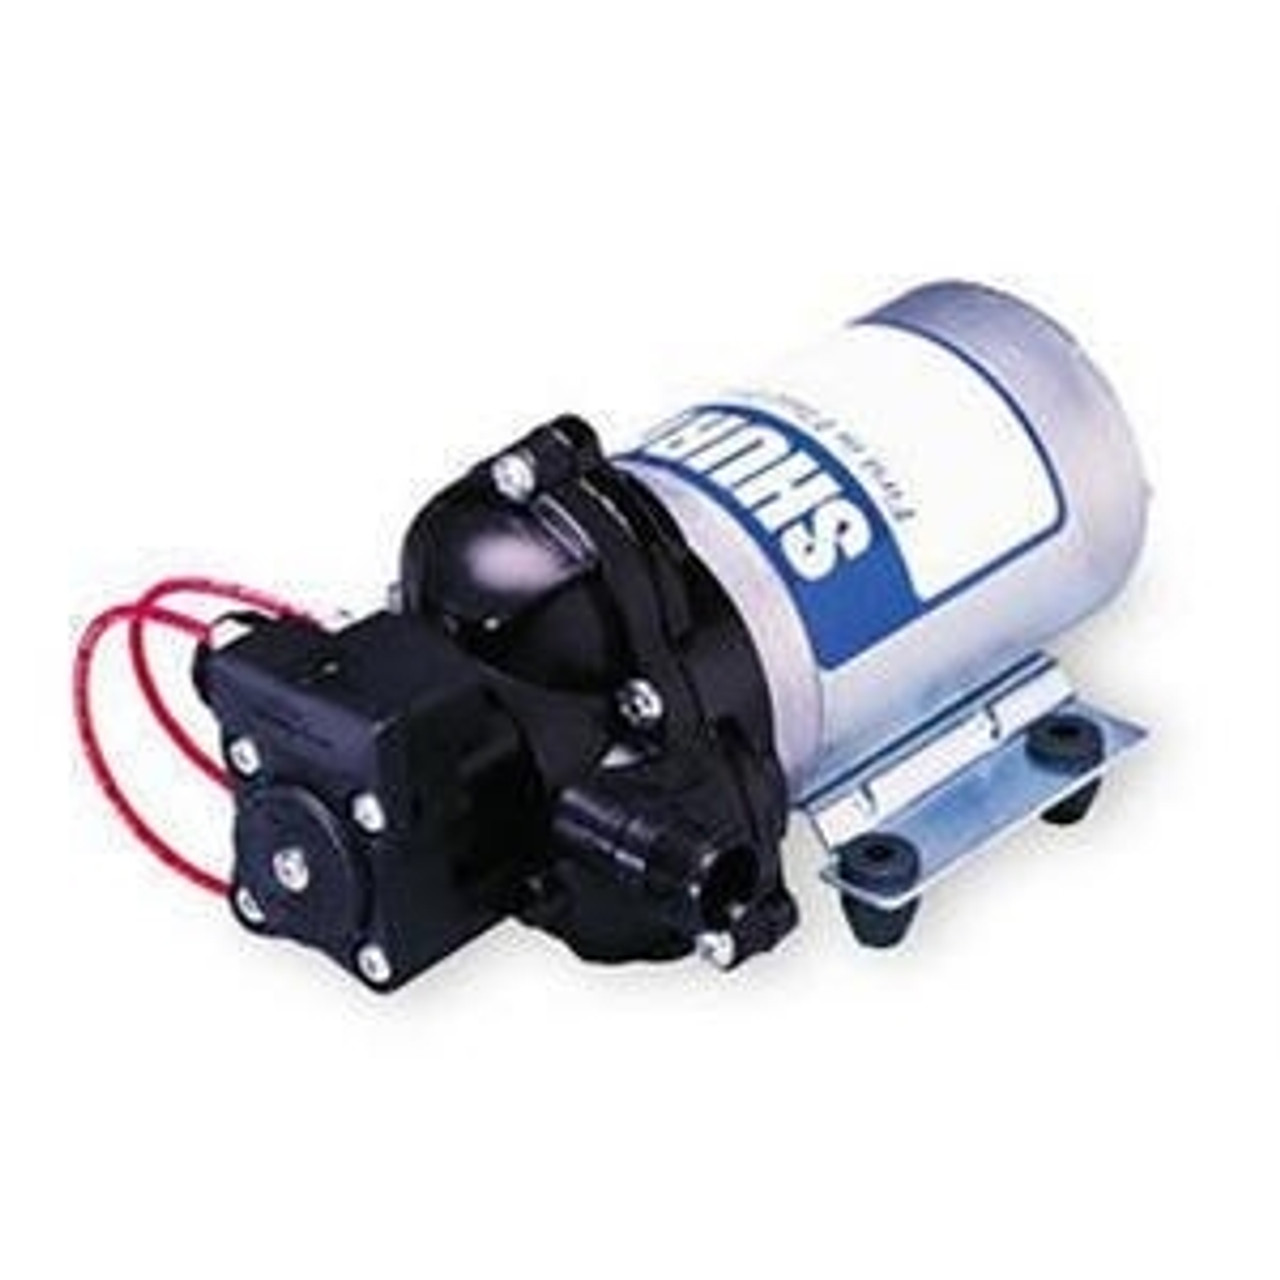 Shurflo 2088-343-435 12v DC Spray Pump with Viton valves & Santoprene diaphragms, 11.4 L/min open flow and 45 psi pressure switch